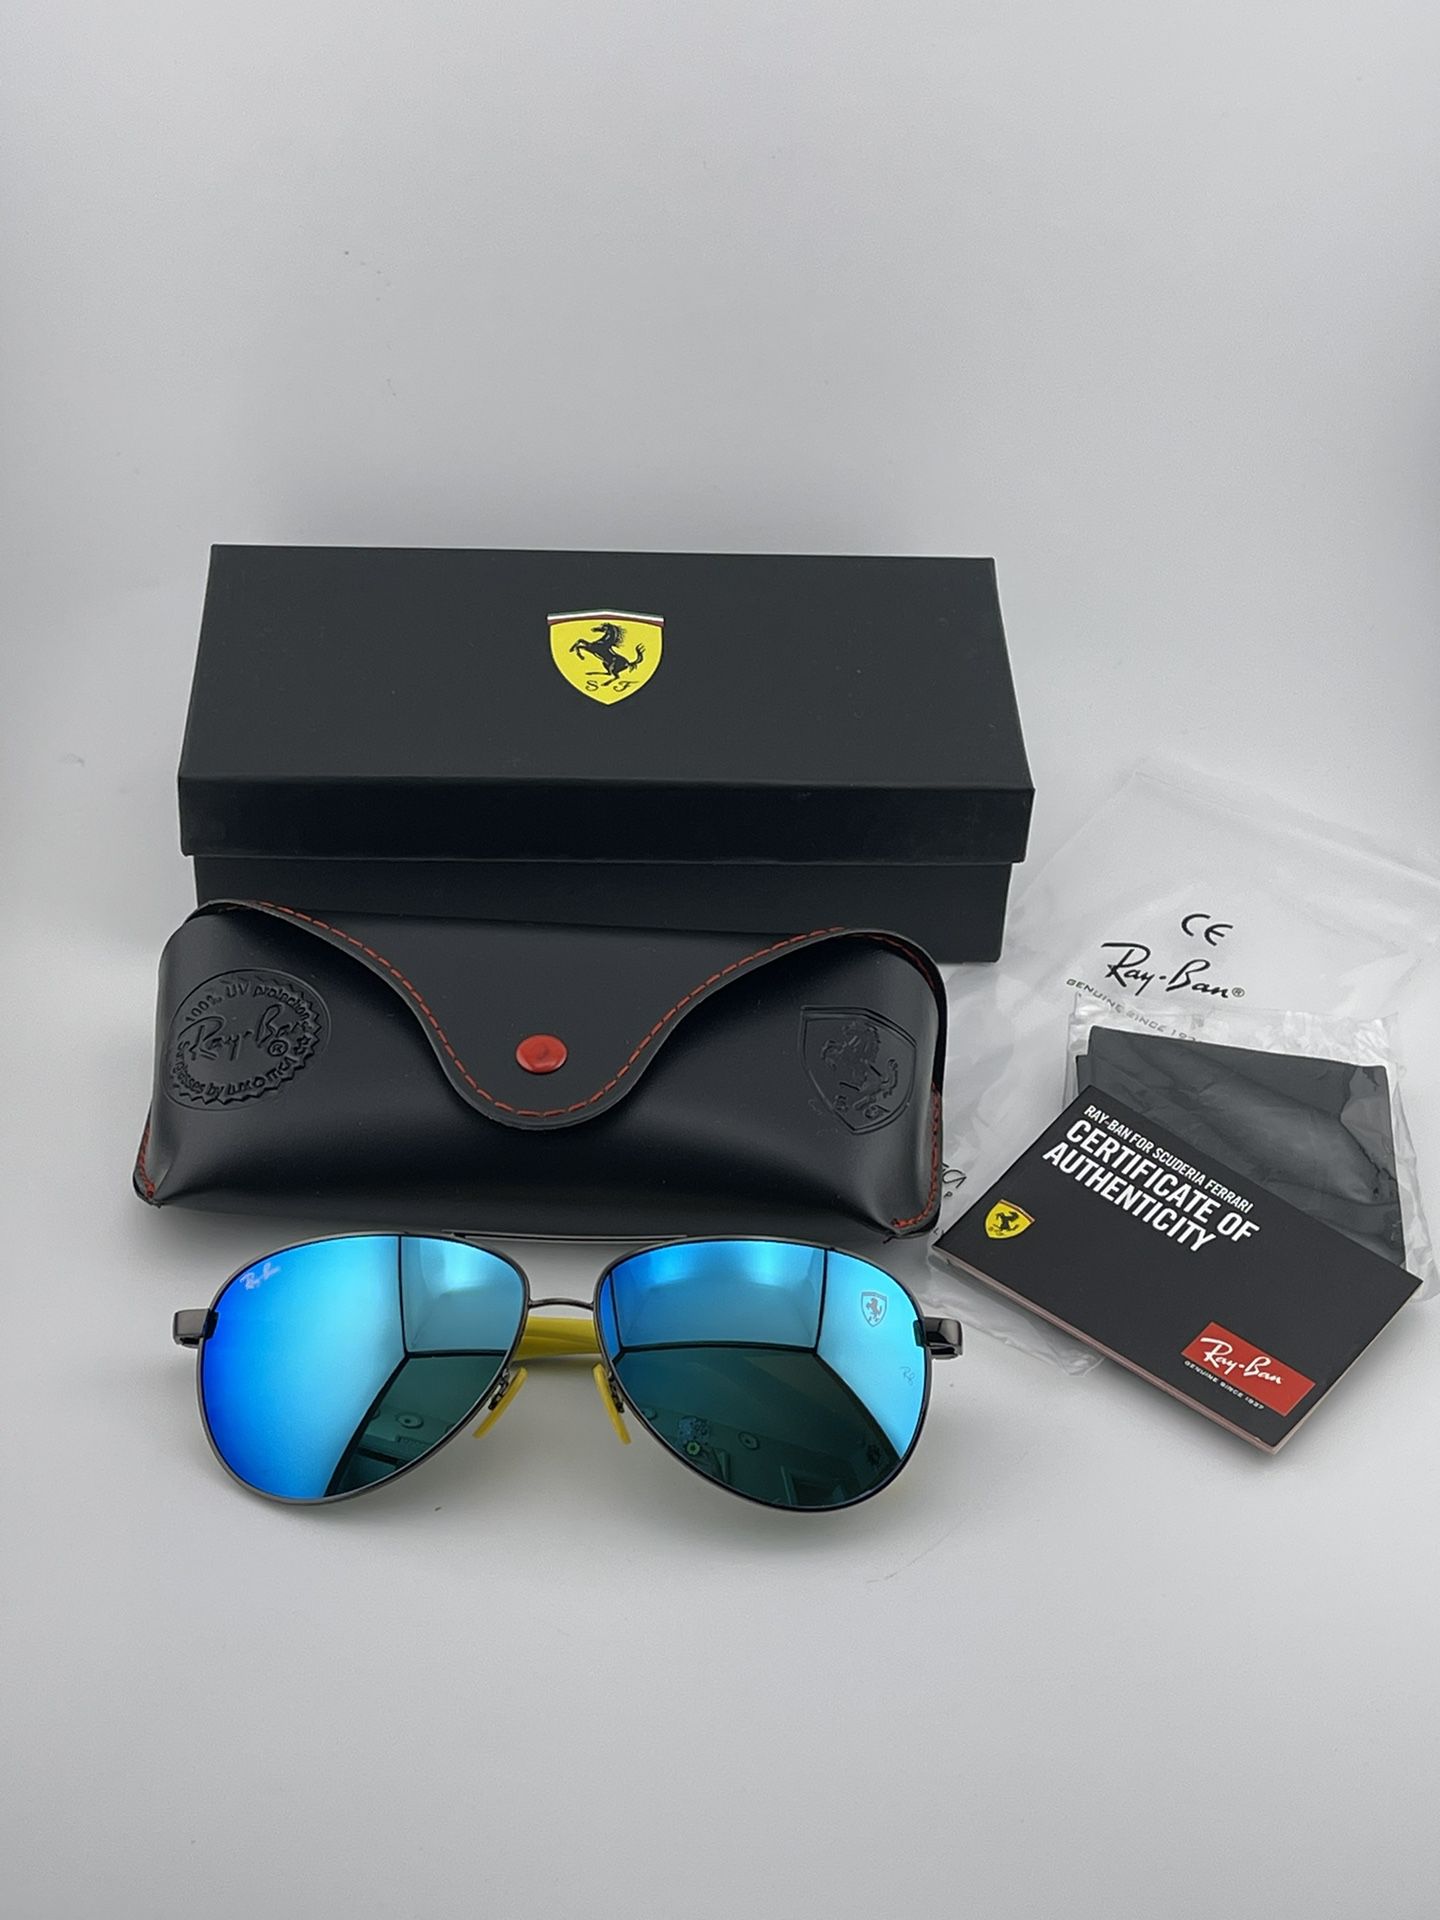 Rayban Ferrari Sunglasses 